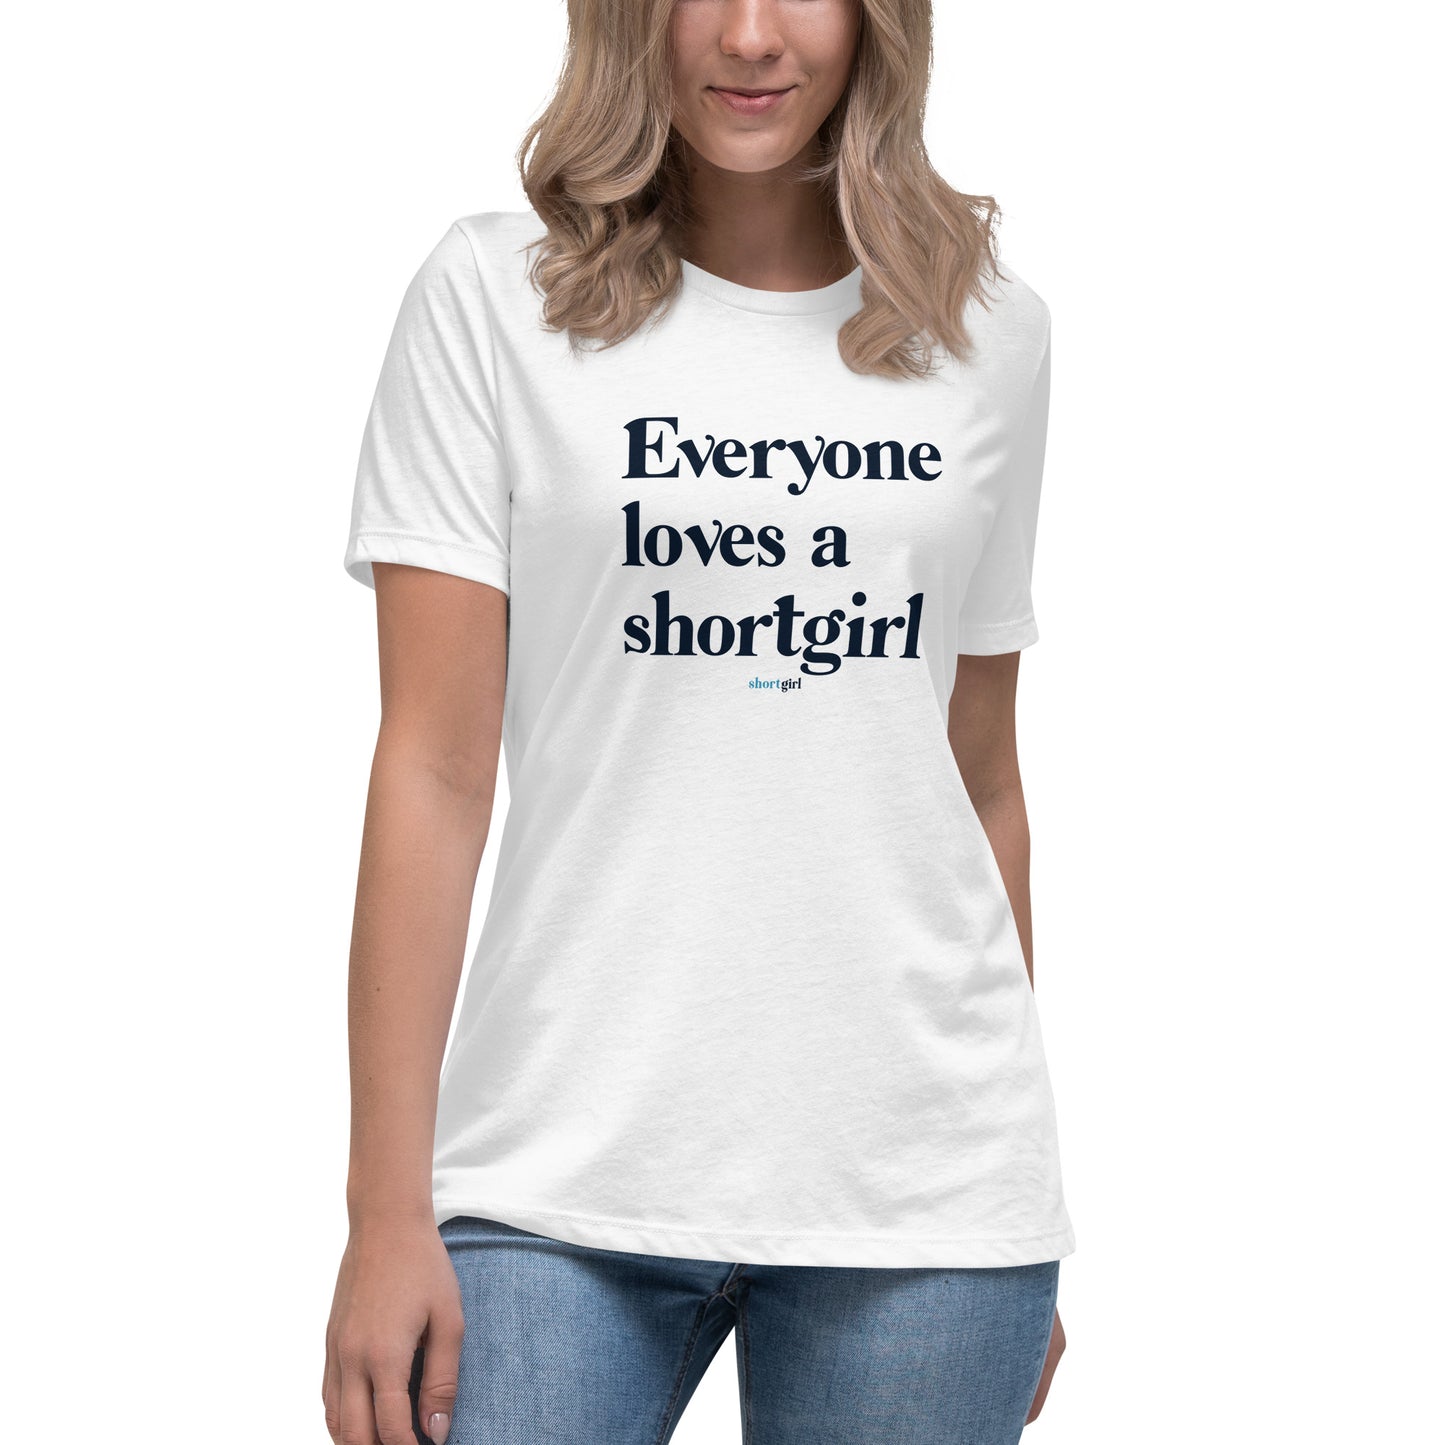 Women's Relaxed T-Shirt - Everyone loves a shortgirl